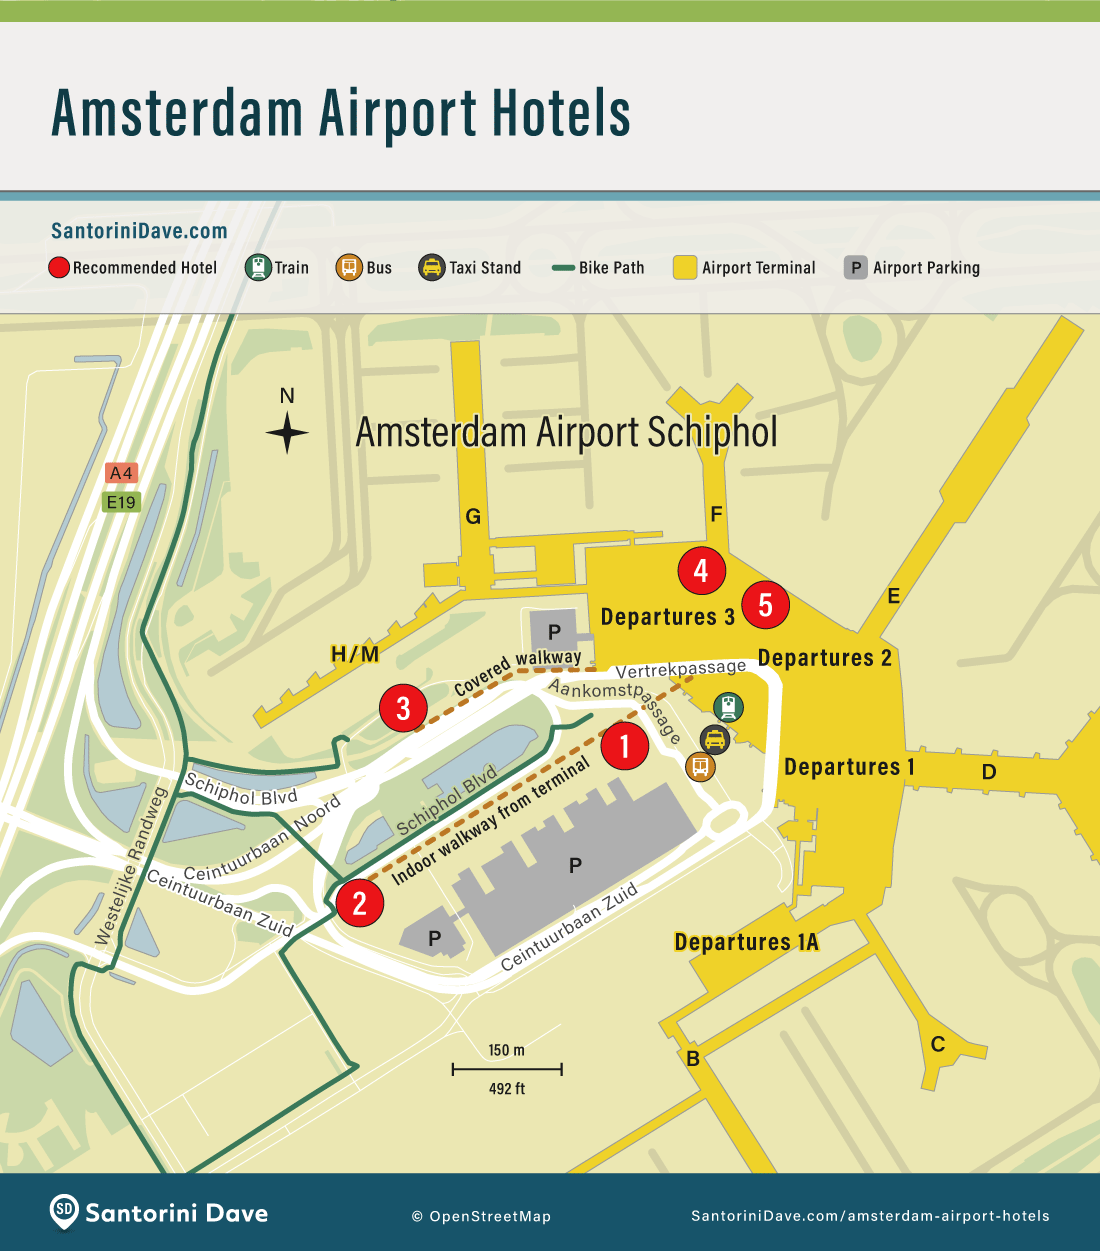 Hotels near Schiphol Amsterdam Airport.